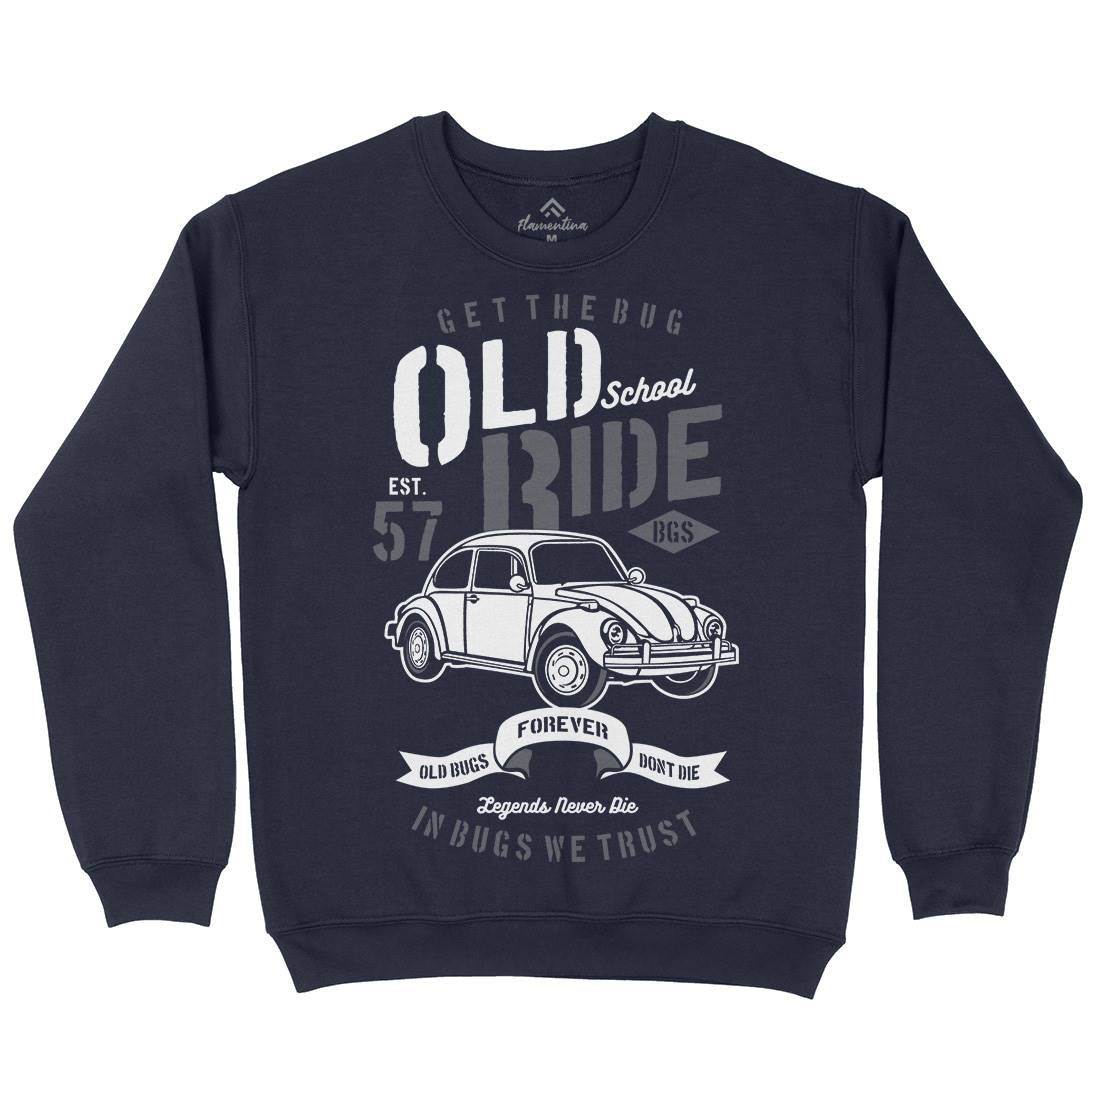 Old School Ride Kids Crew Neck Sweatshirt Cars B239